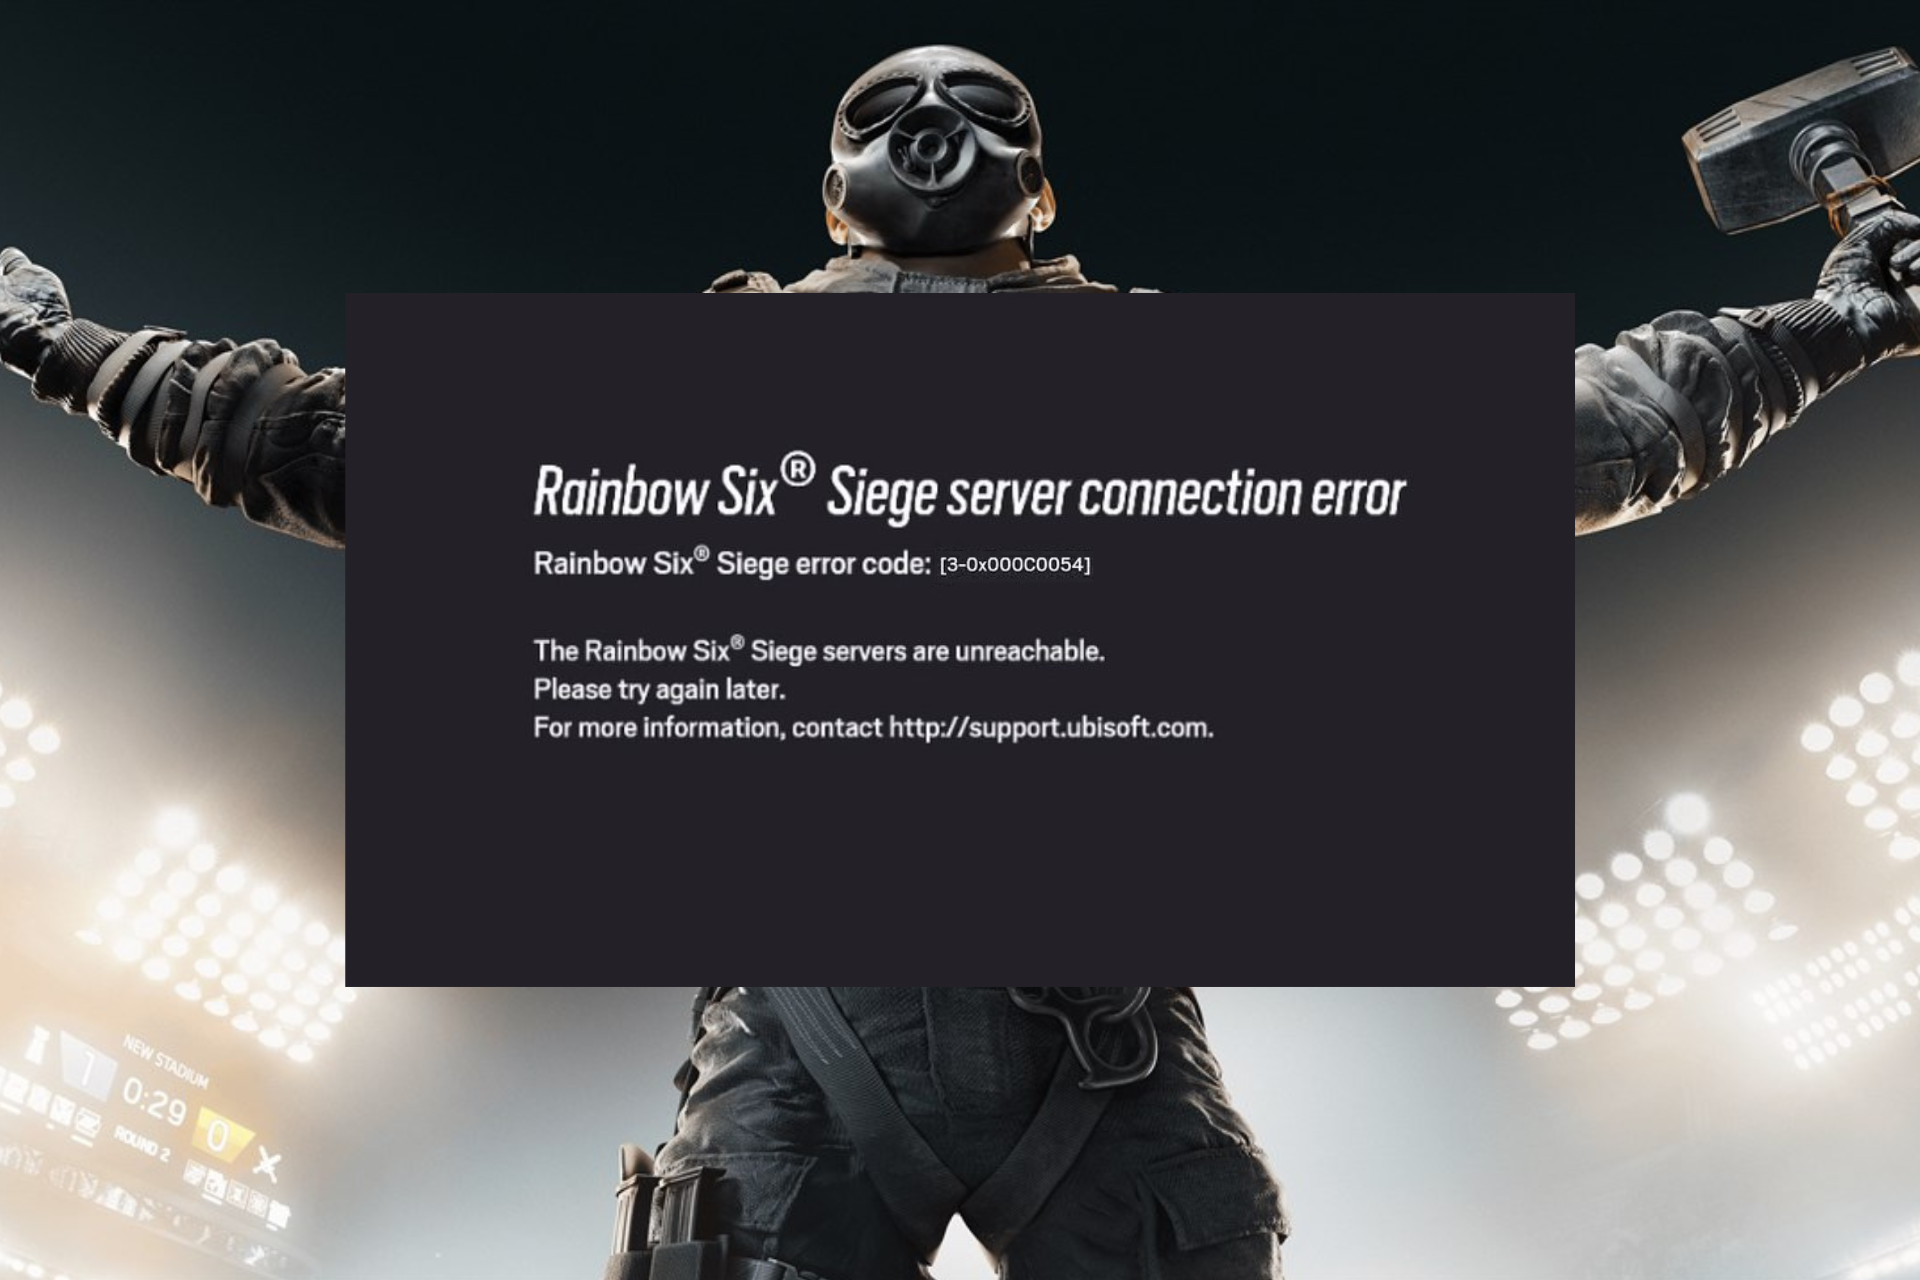 Fix: Rainbow Six Siege Error Code 3-0x000c0054